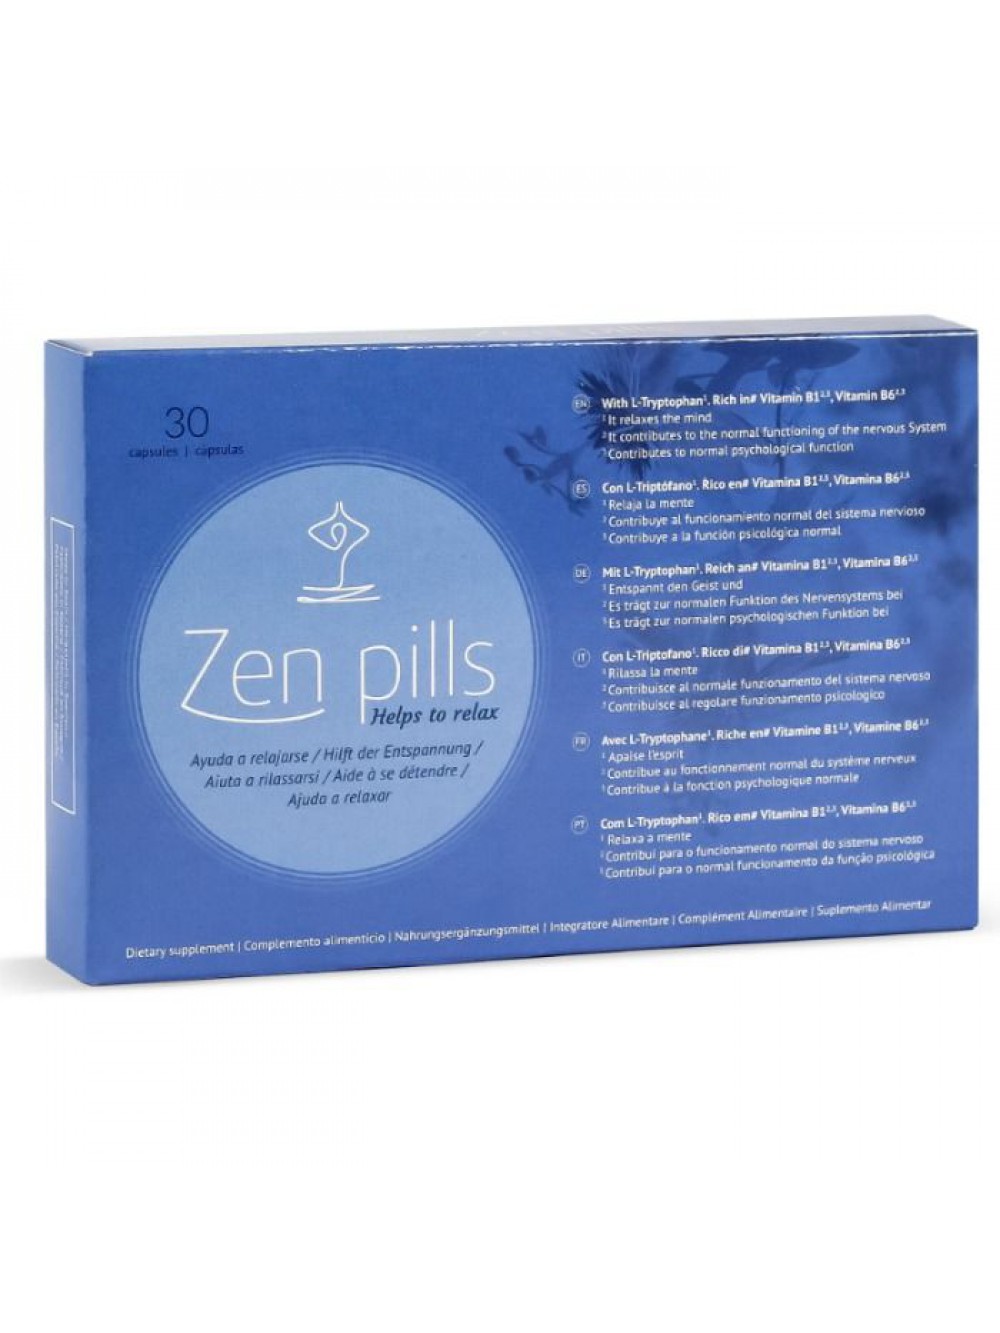 Zen Pills: Capsule rilassanti per controllare l